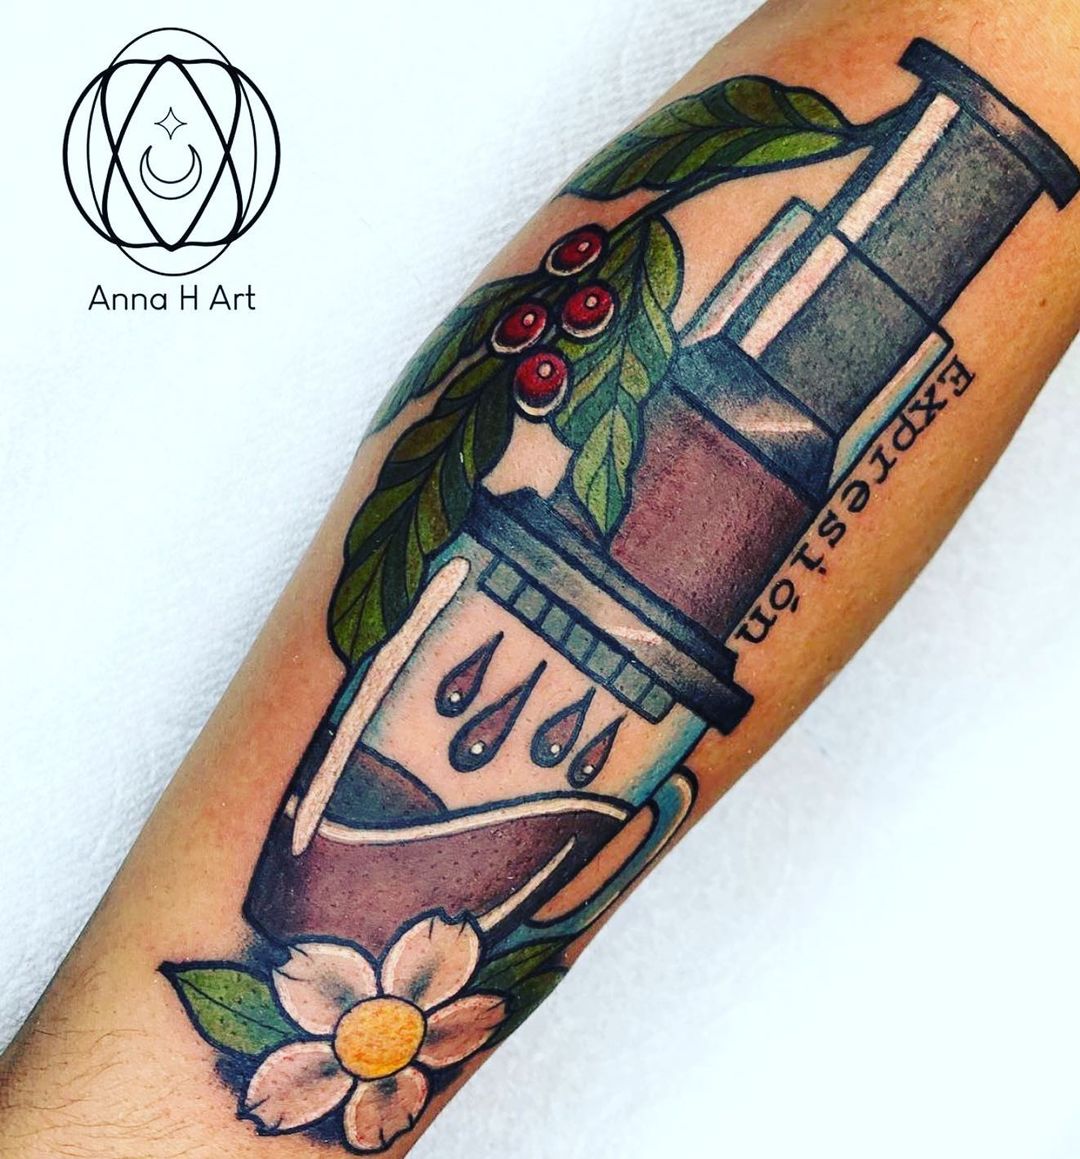 AeroPress tattoo with white flower and coffee cherries